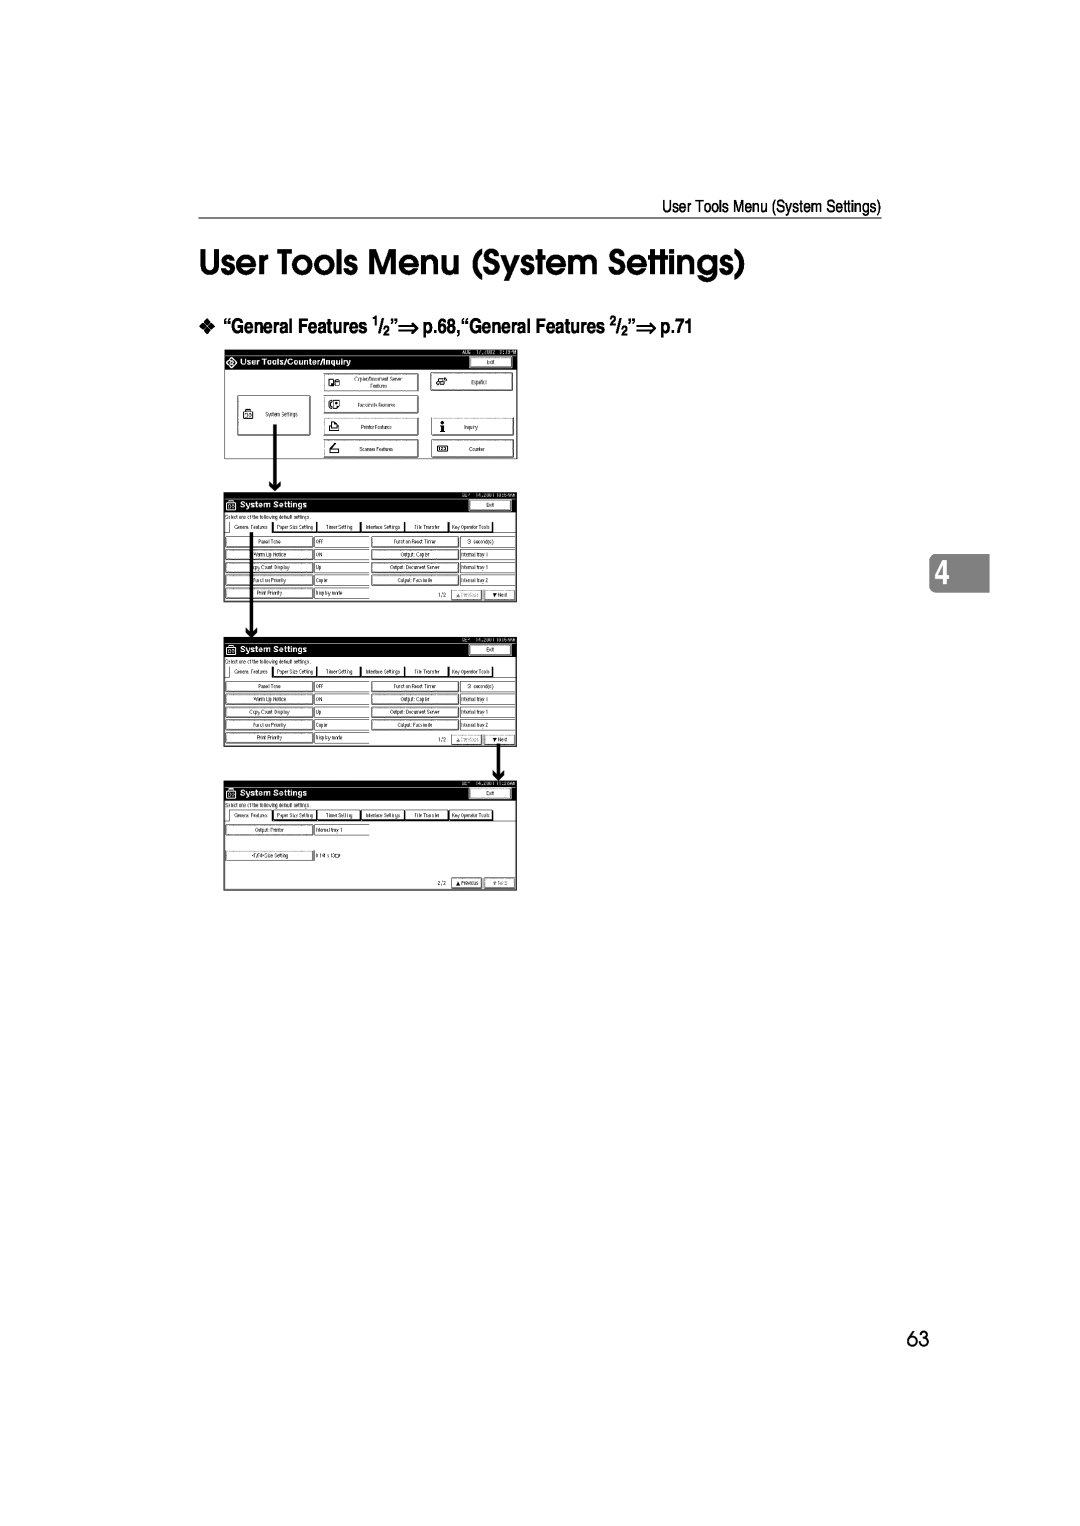 Lanier 5622 AG, 5627 AG manual User Tools Menu System Settings, “General Features 1/2”⇒ p.68,“General Features 2/2”⇒ p.71 